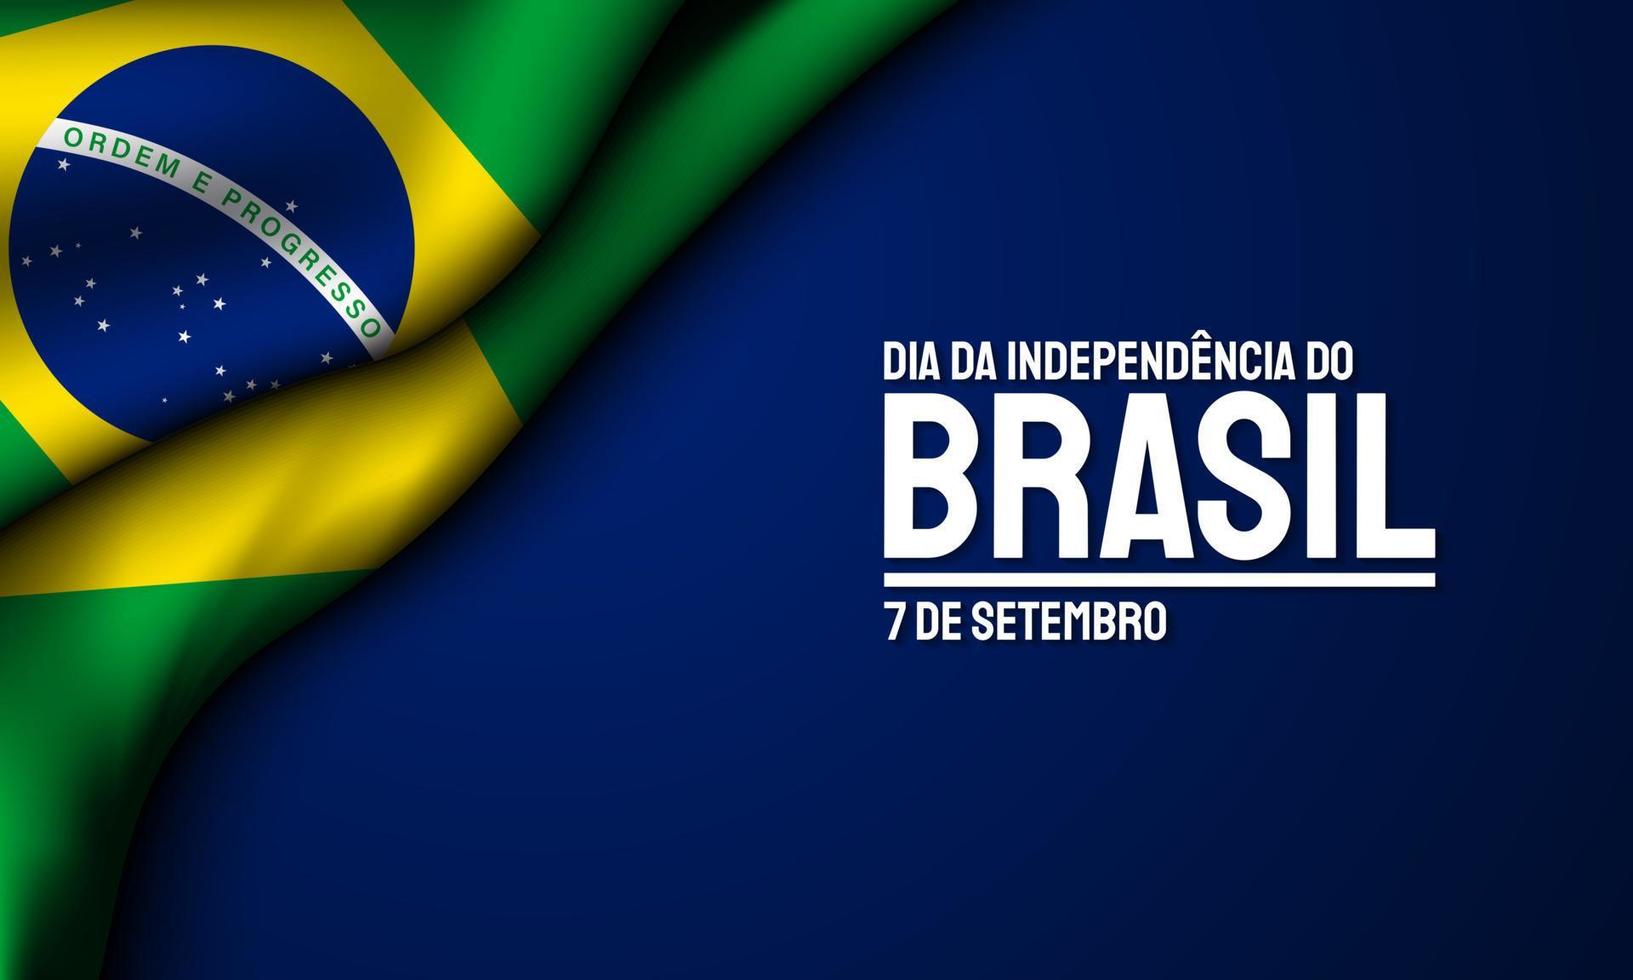 Brazil Independence Day Background Design. vector